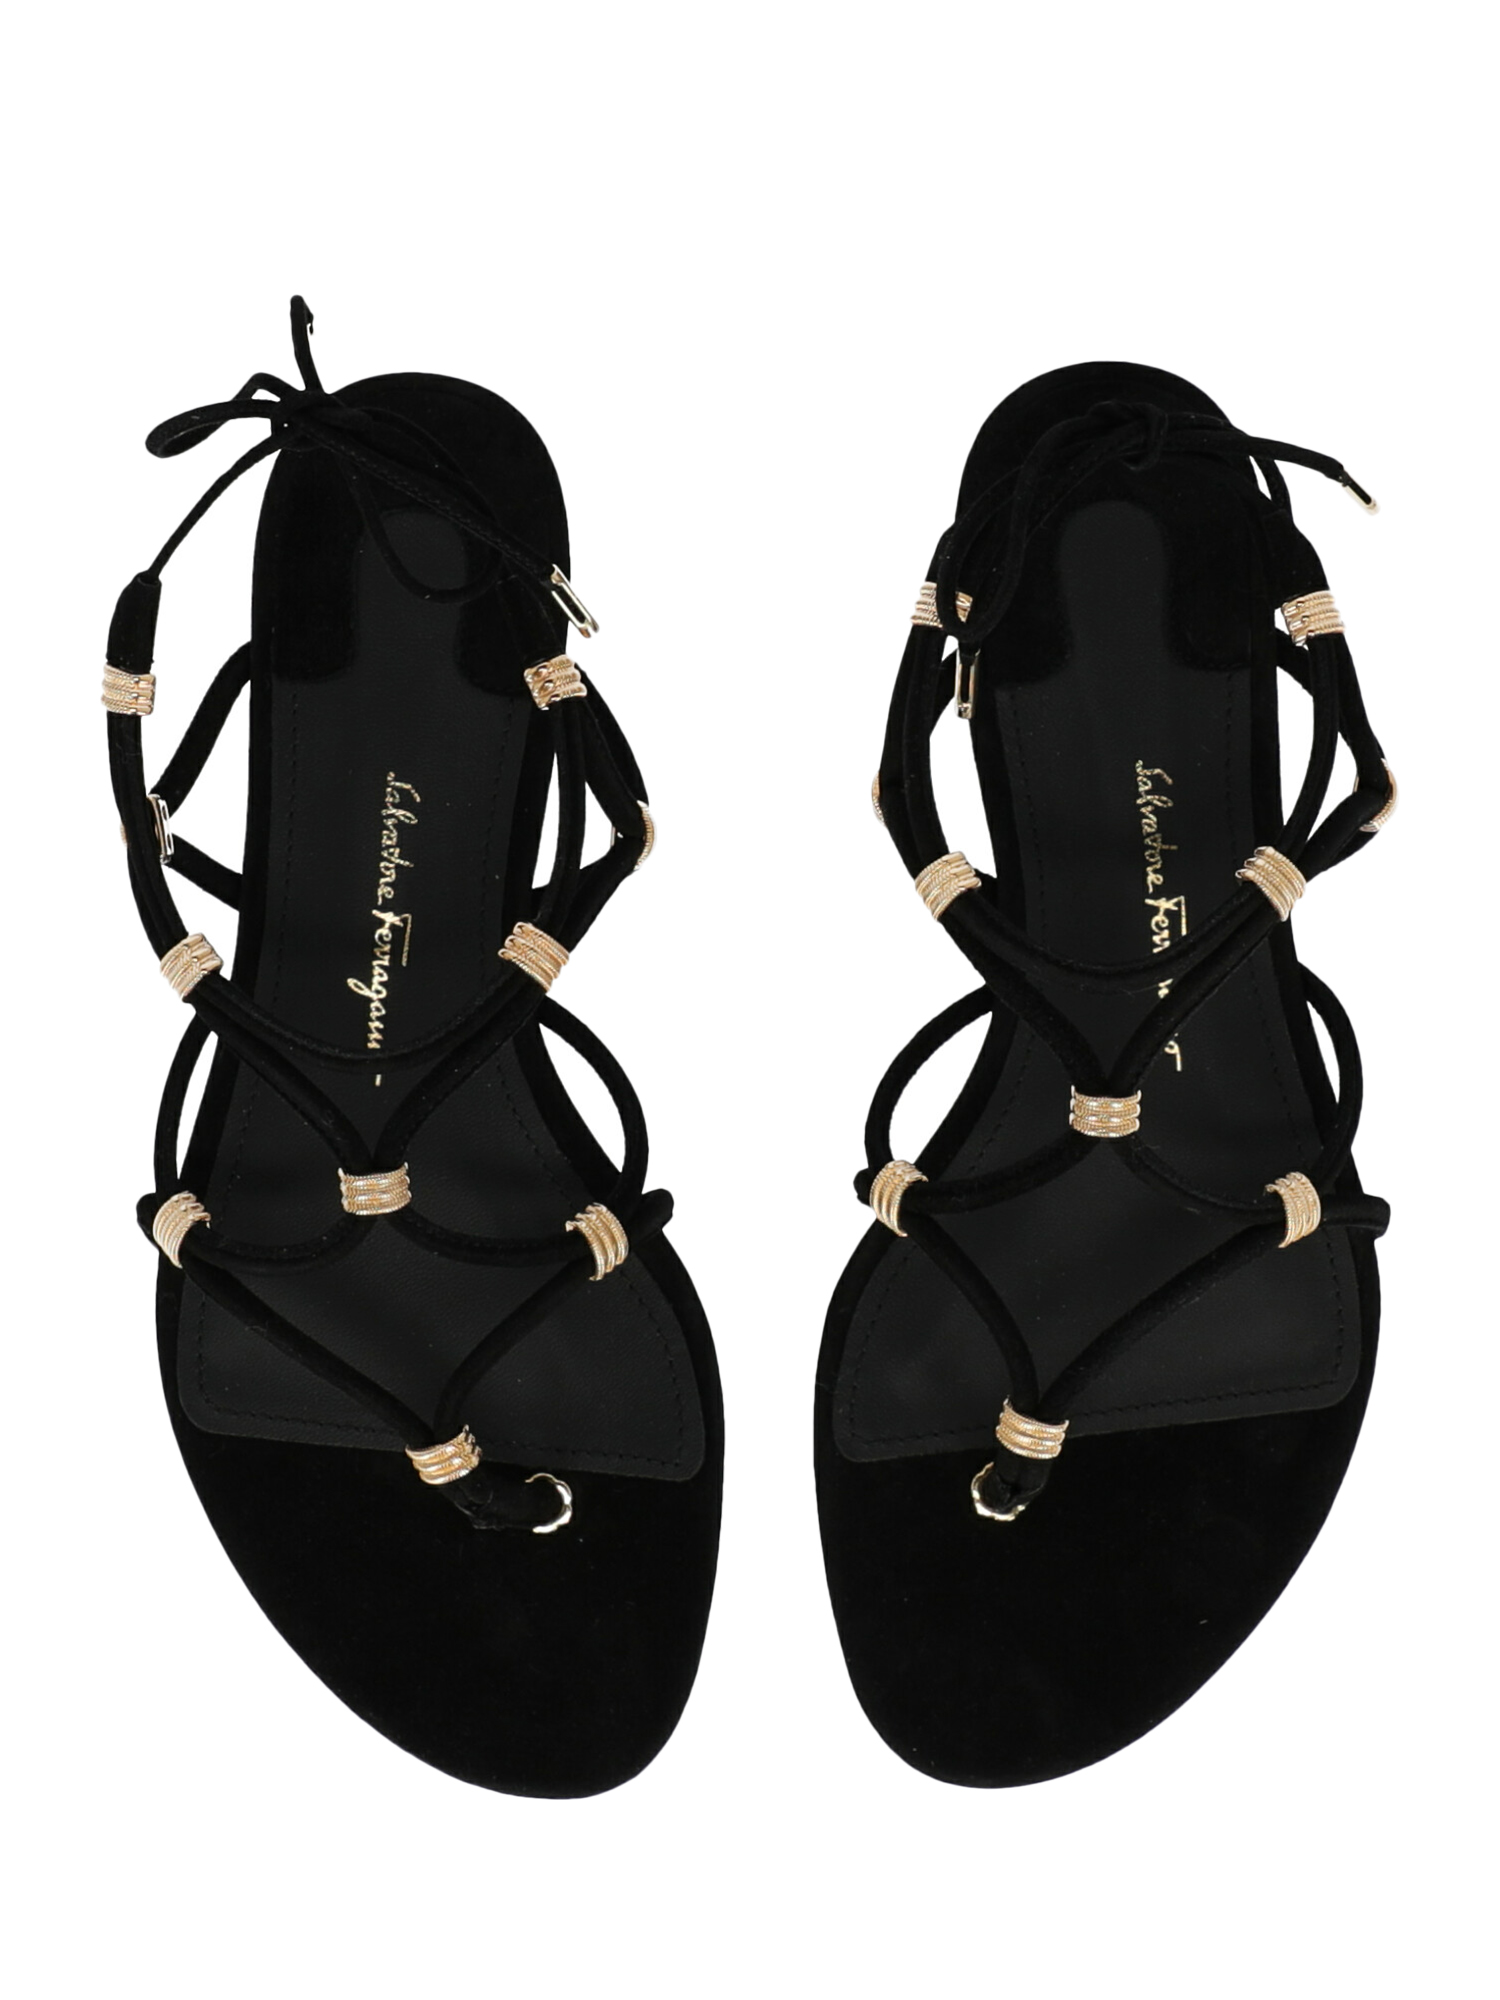 Salvatore Ferragamo Special Price Women Shoes Sandals Black US 5.5 | eBay